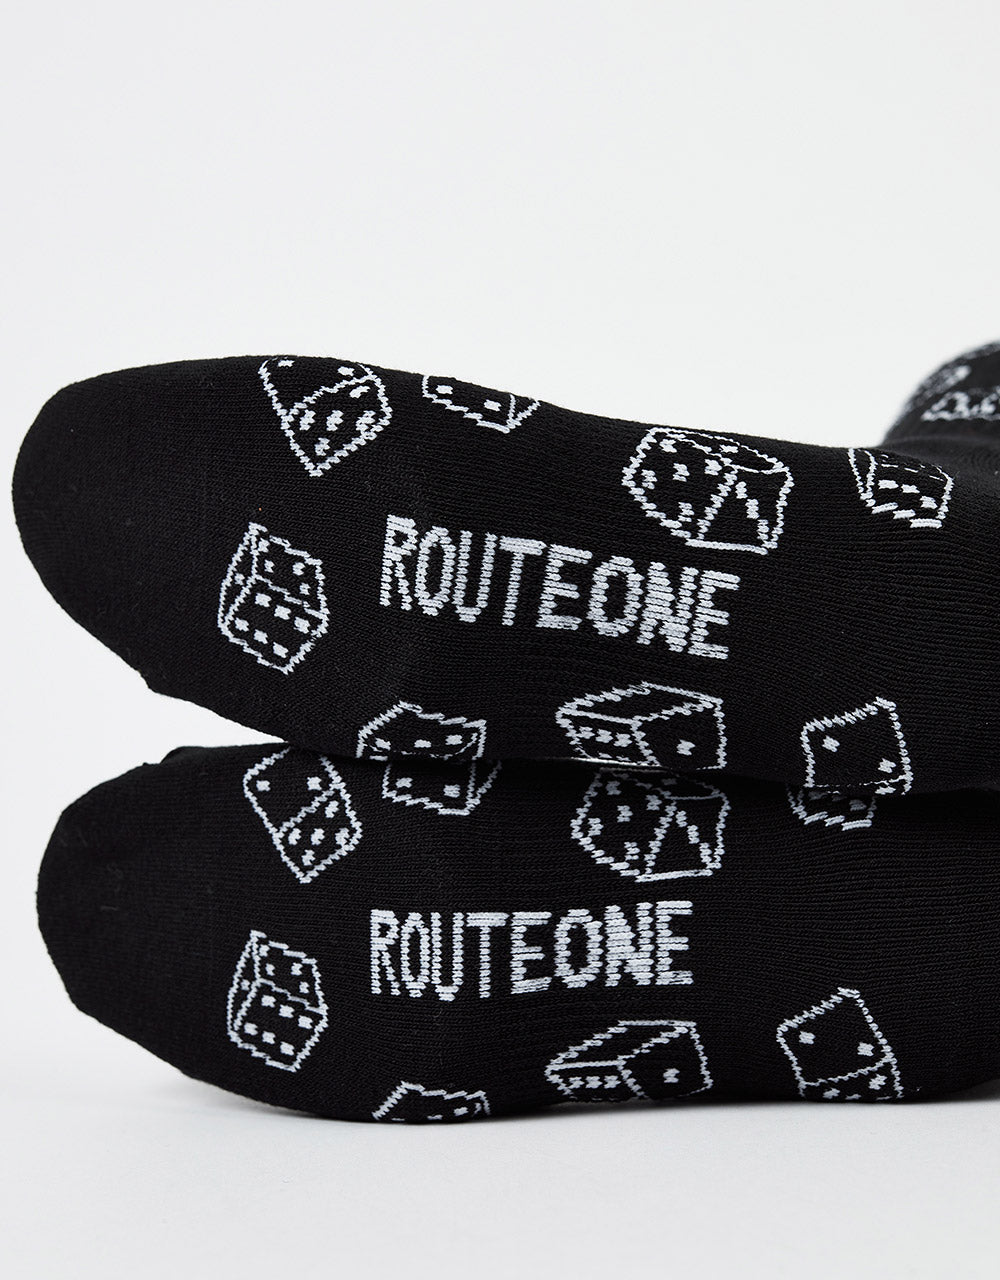 Route One Dice Socks - Black